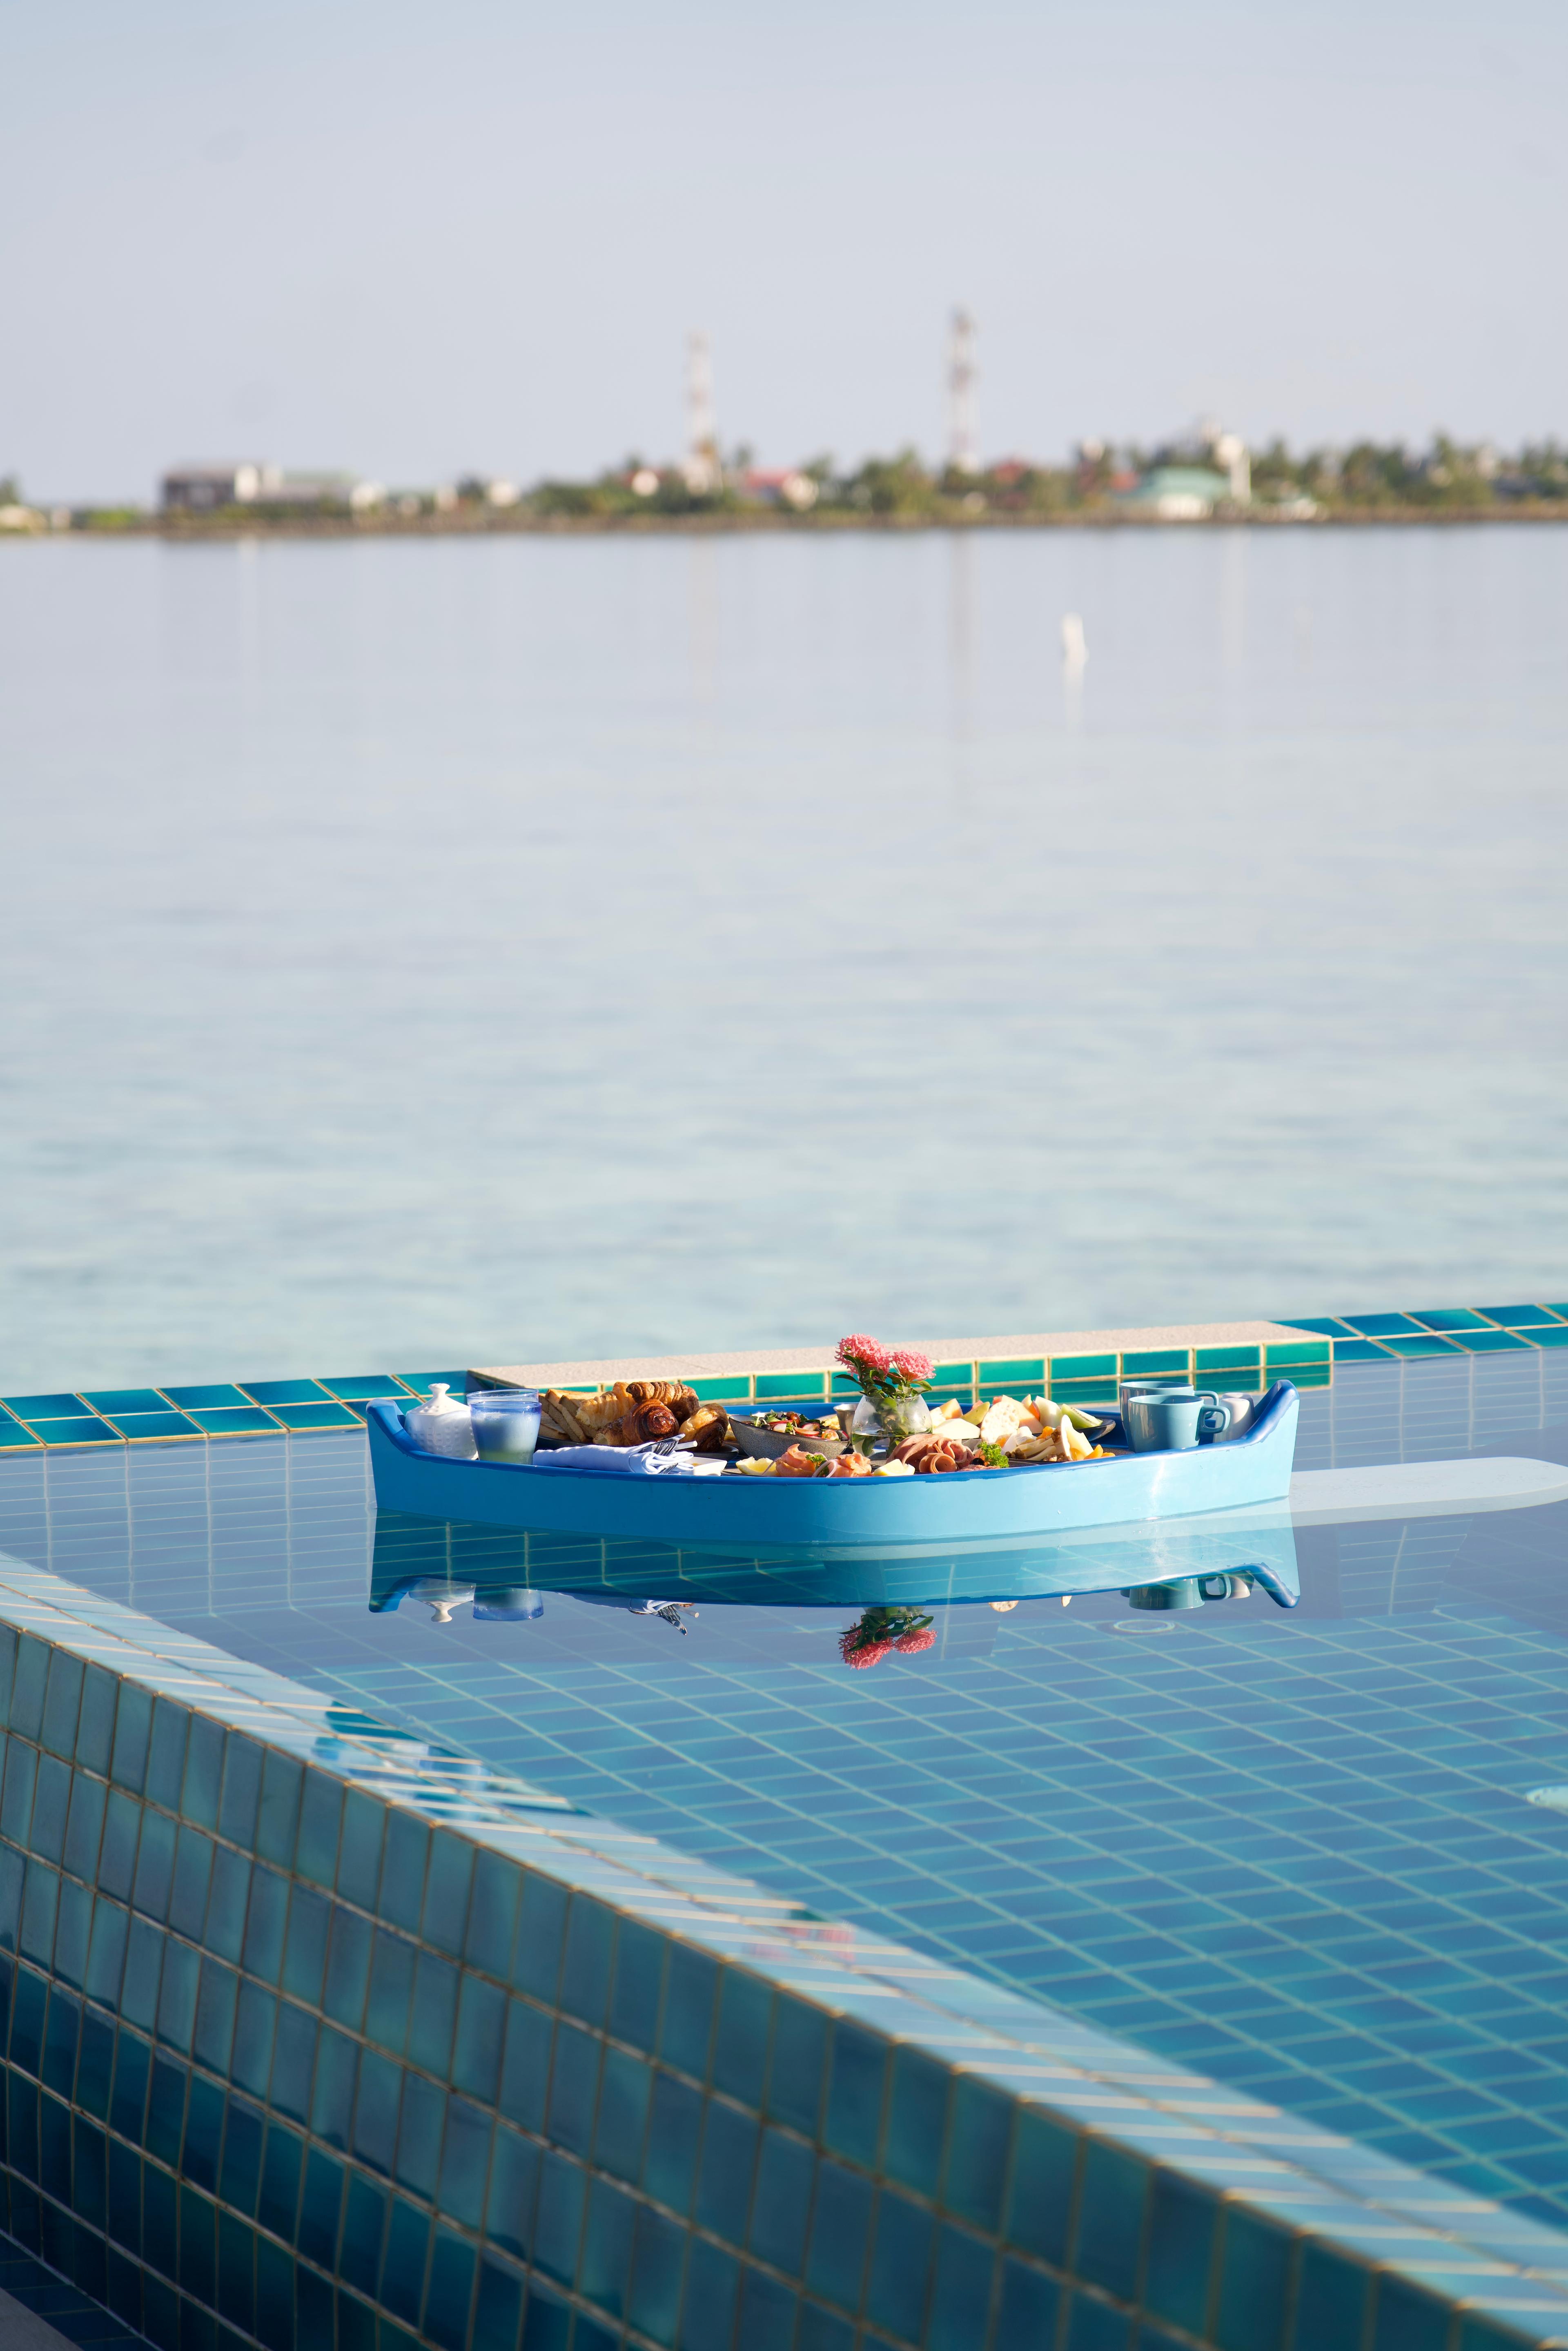 Floating Breakfast Maldives